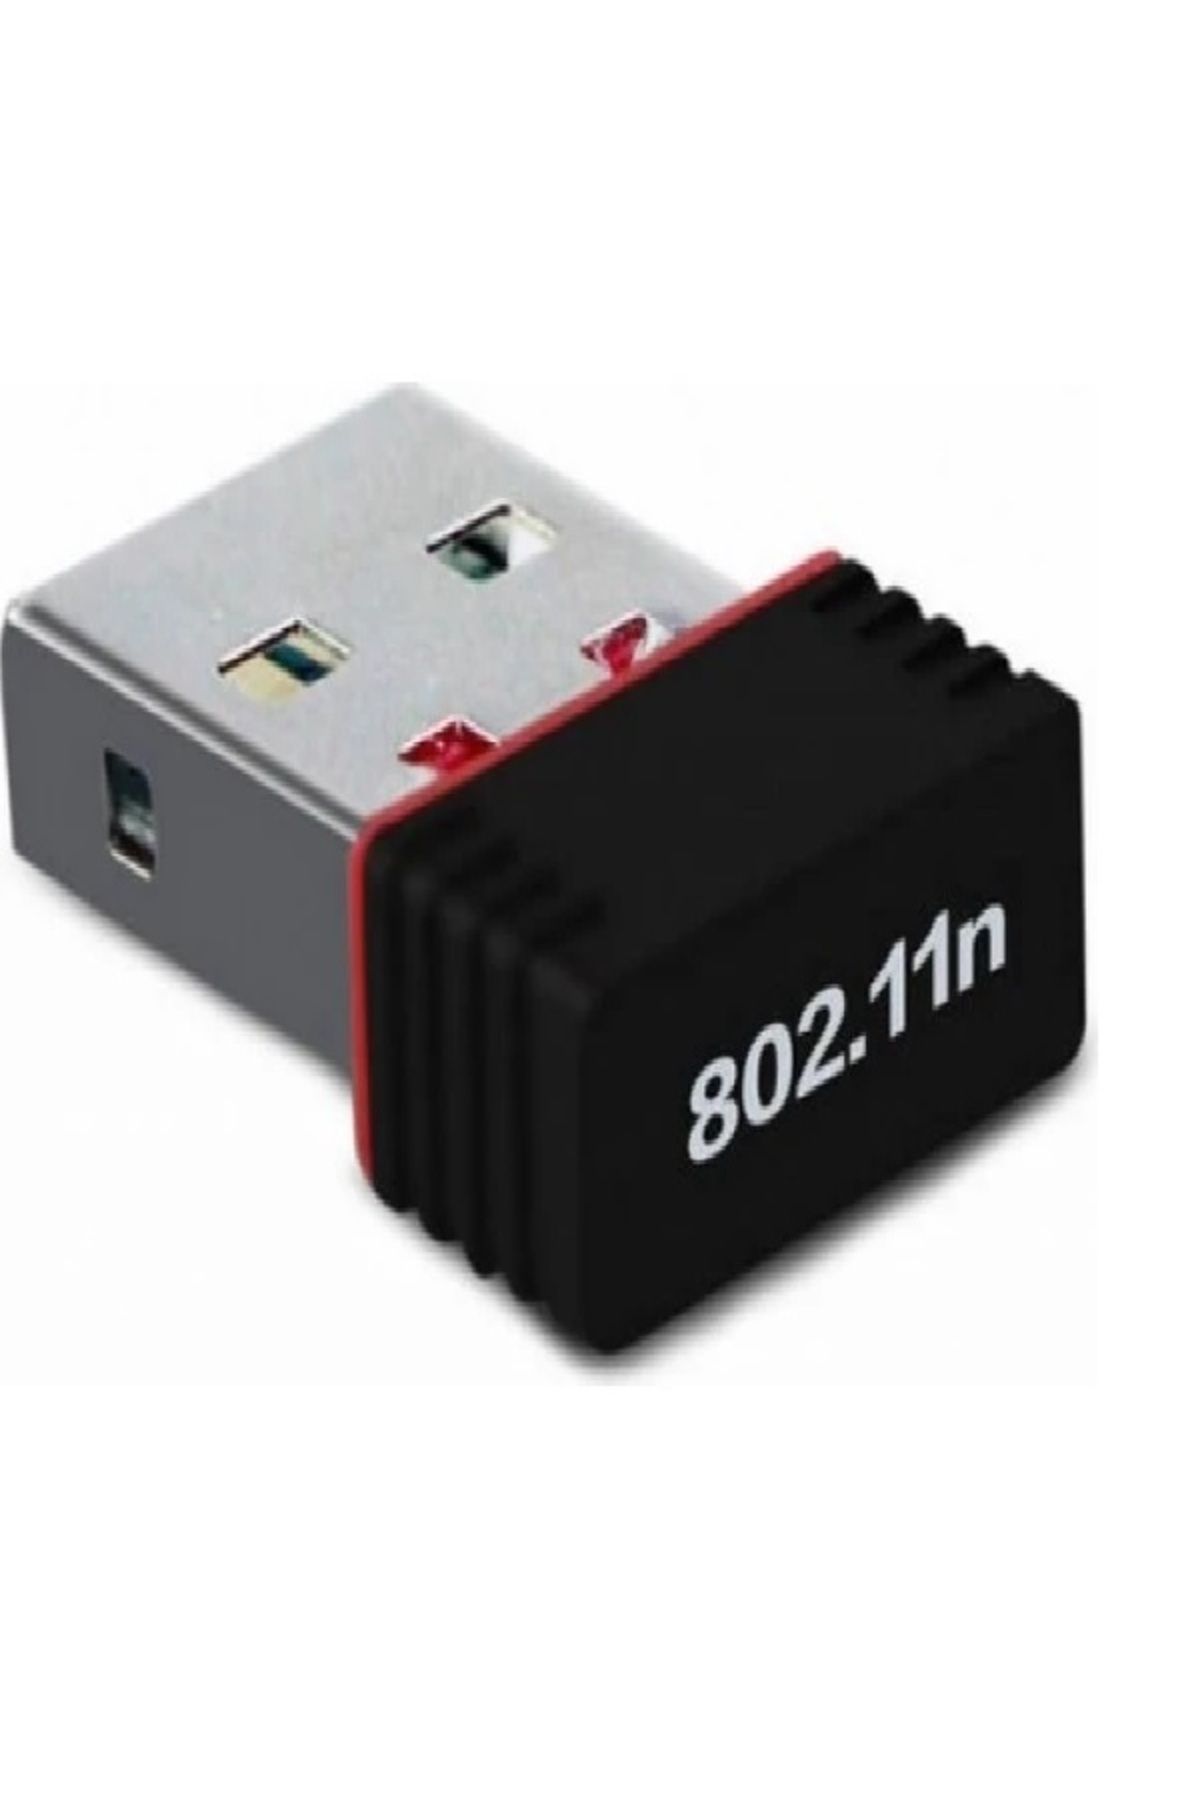 OEM DG-6 USB 2.0 GOMAX 802.IIN WIRELESS 150/MBPS MİNİ WİFİ ALICI Uyumlu